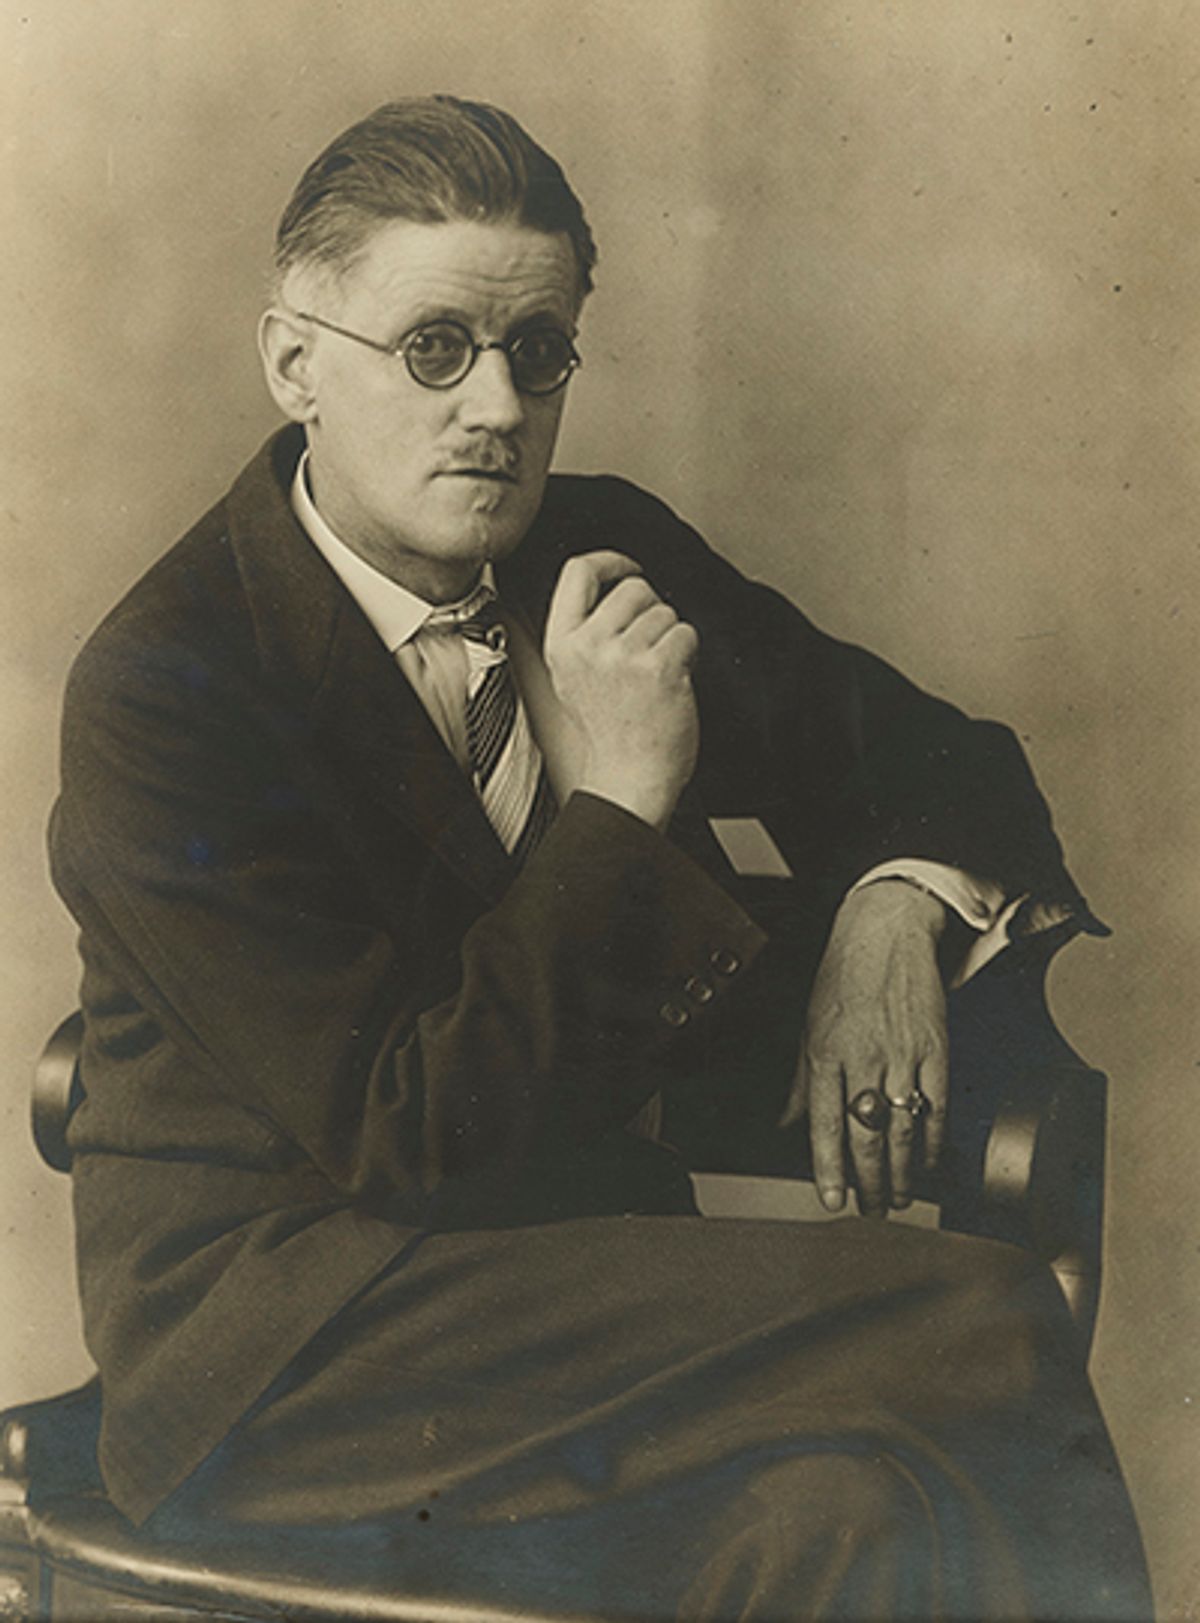 Portrait of James Joyce by Berenice Abbott Sutton